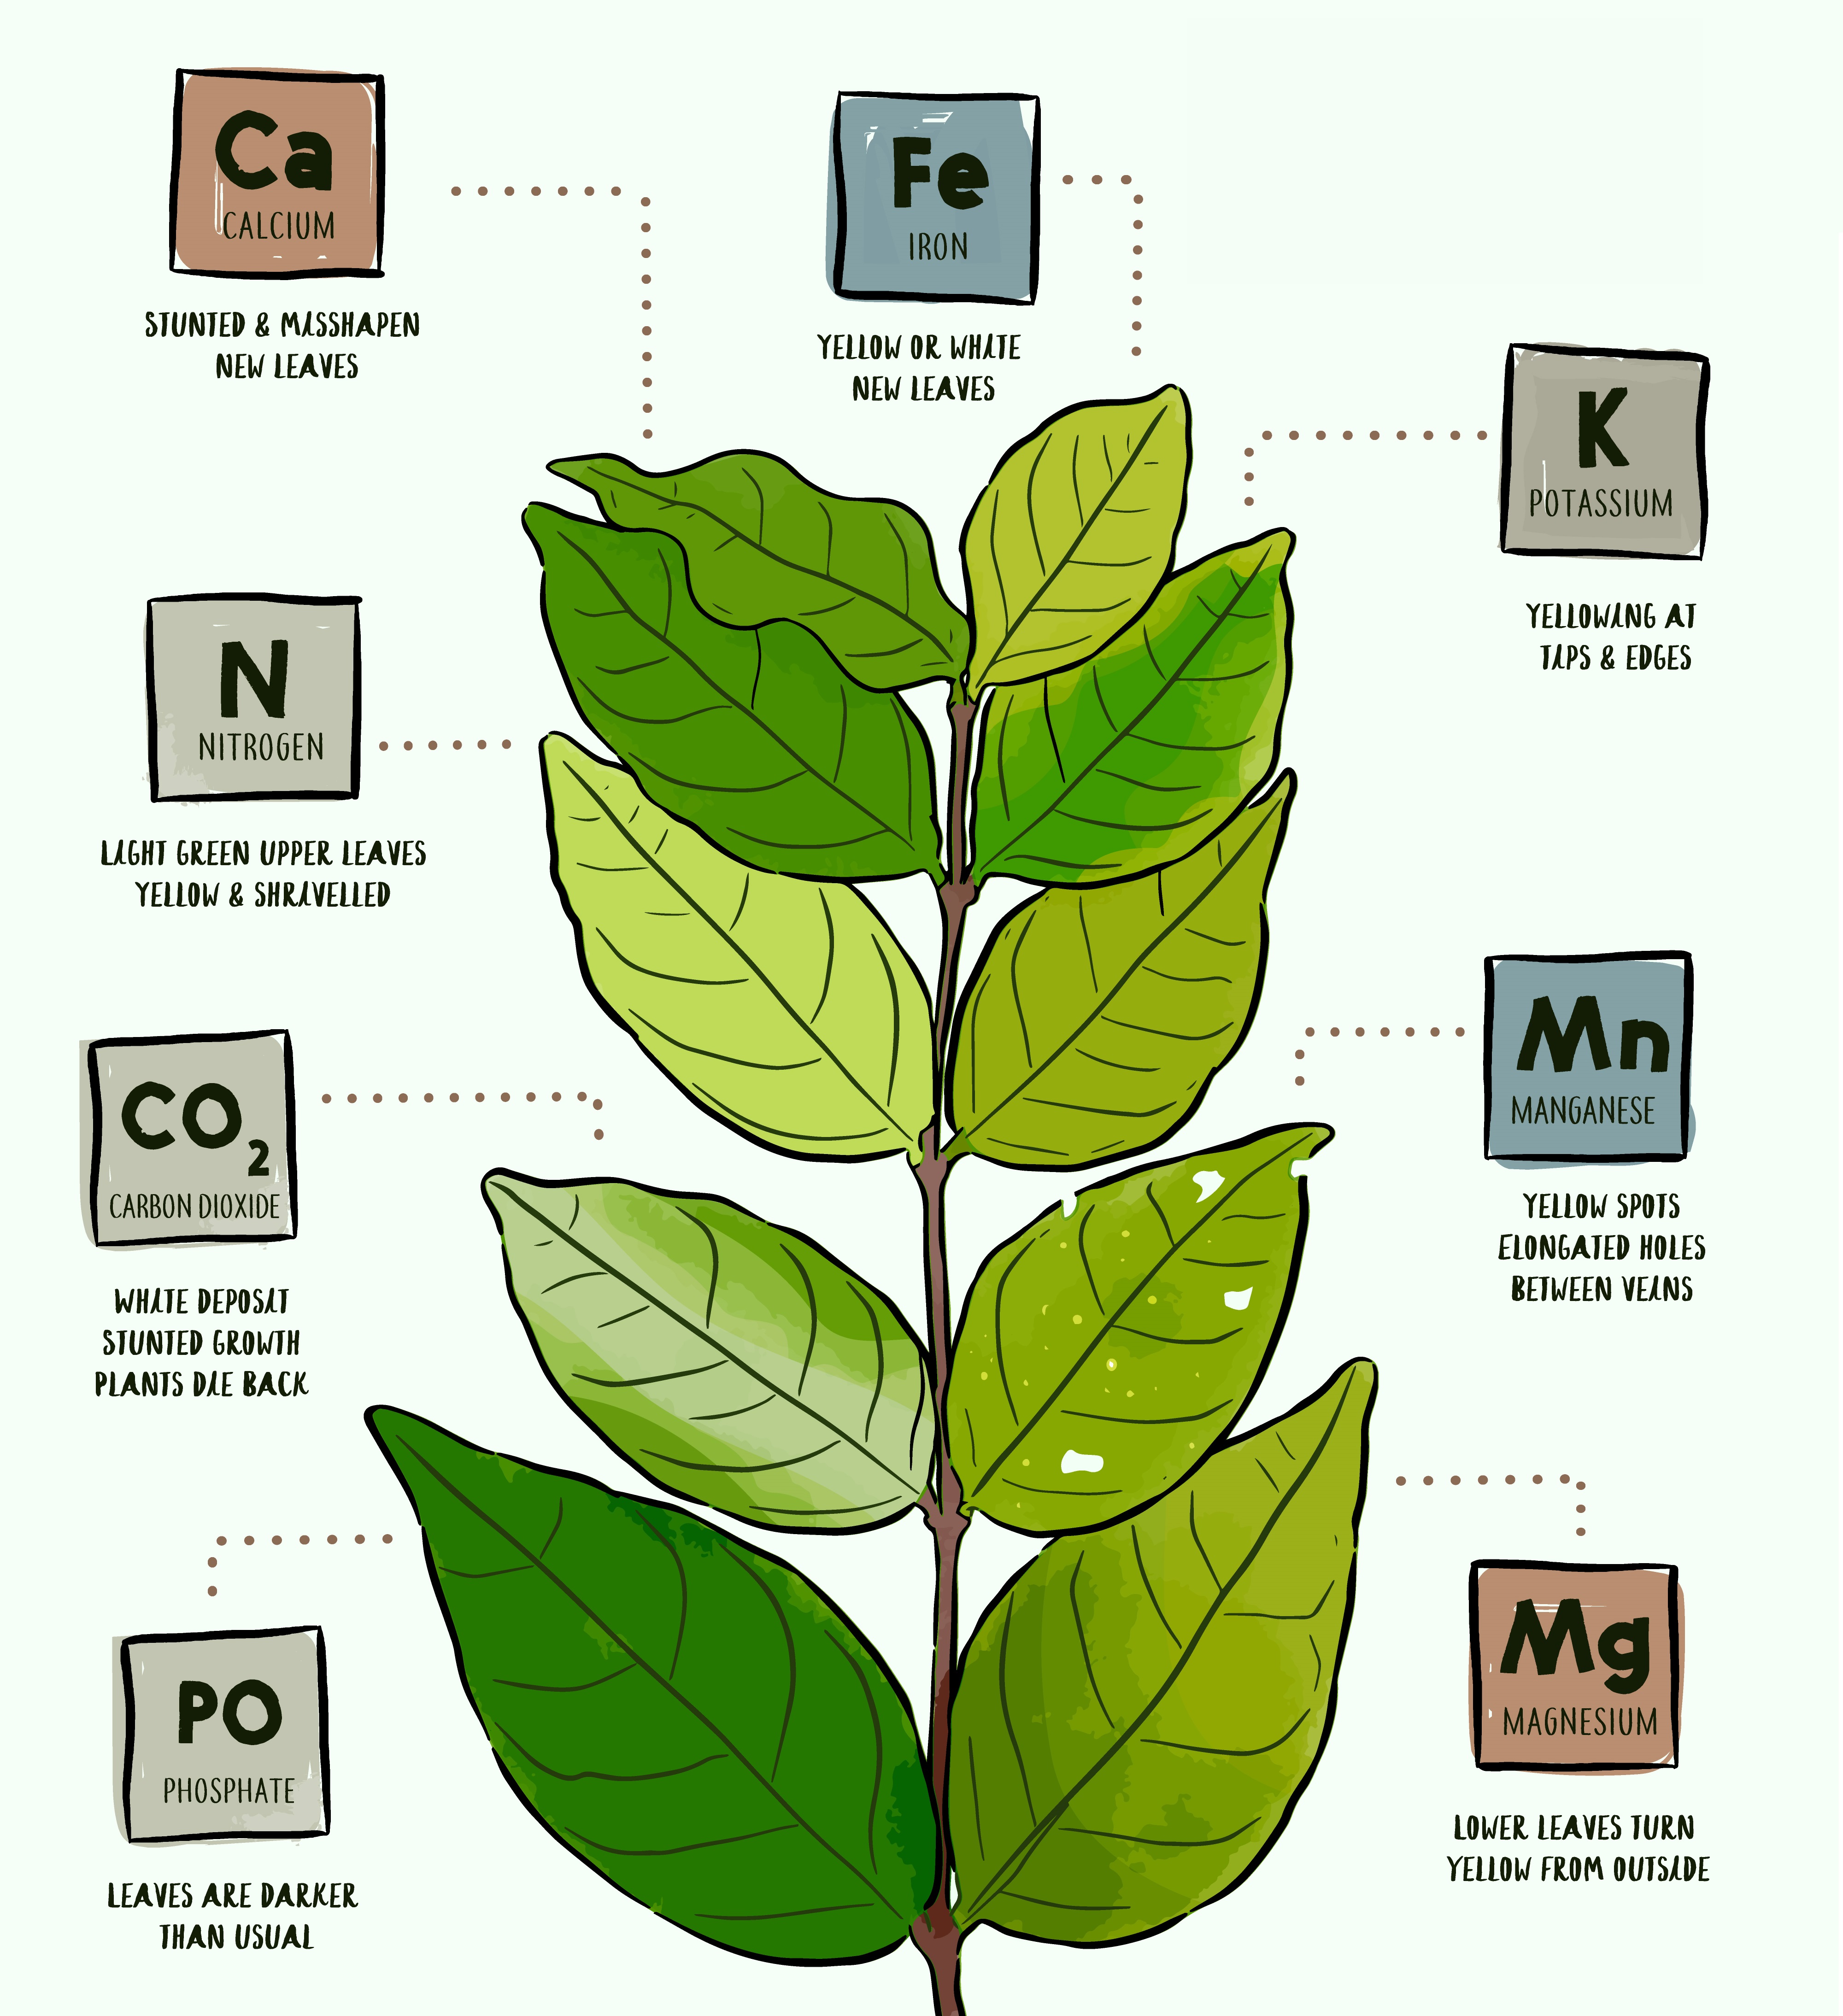 What is nitrogen plant?